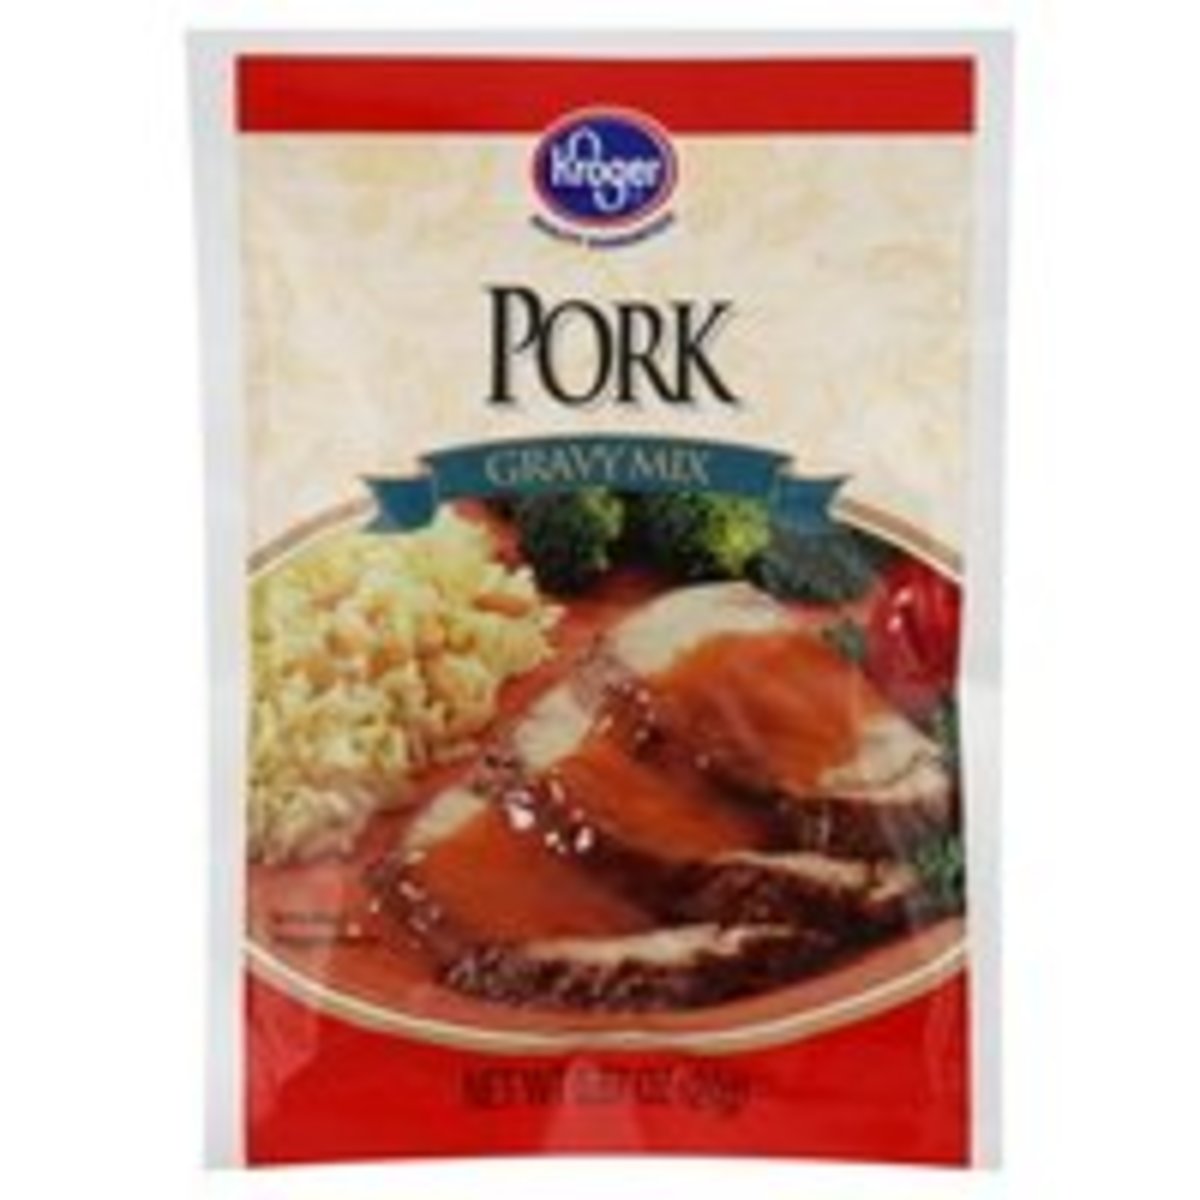 Pork gravy mix KROGER'S brand